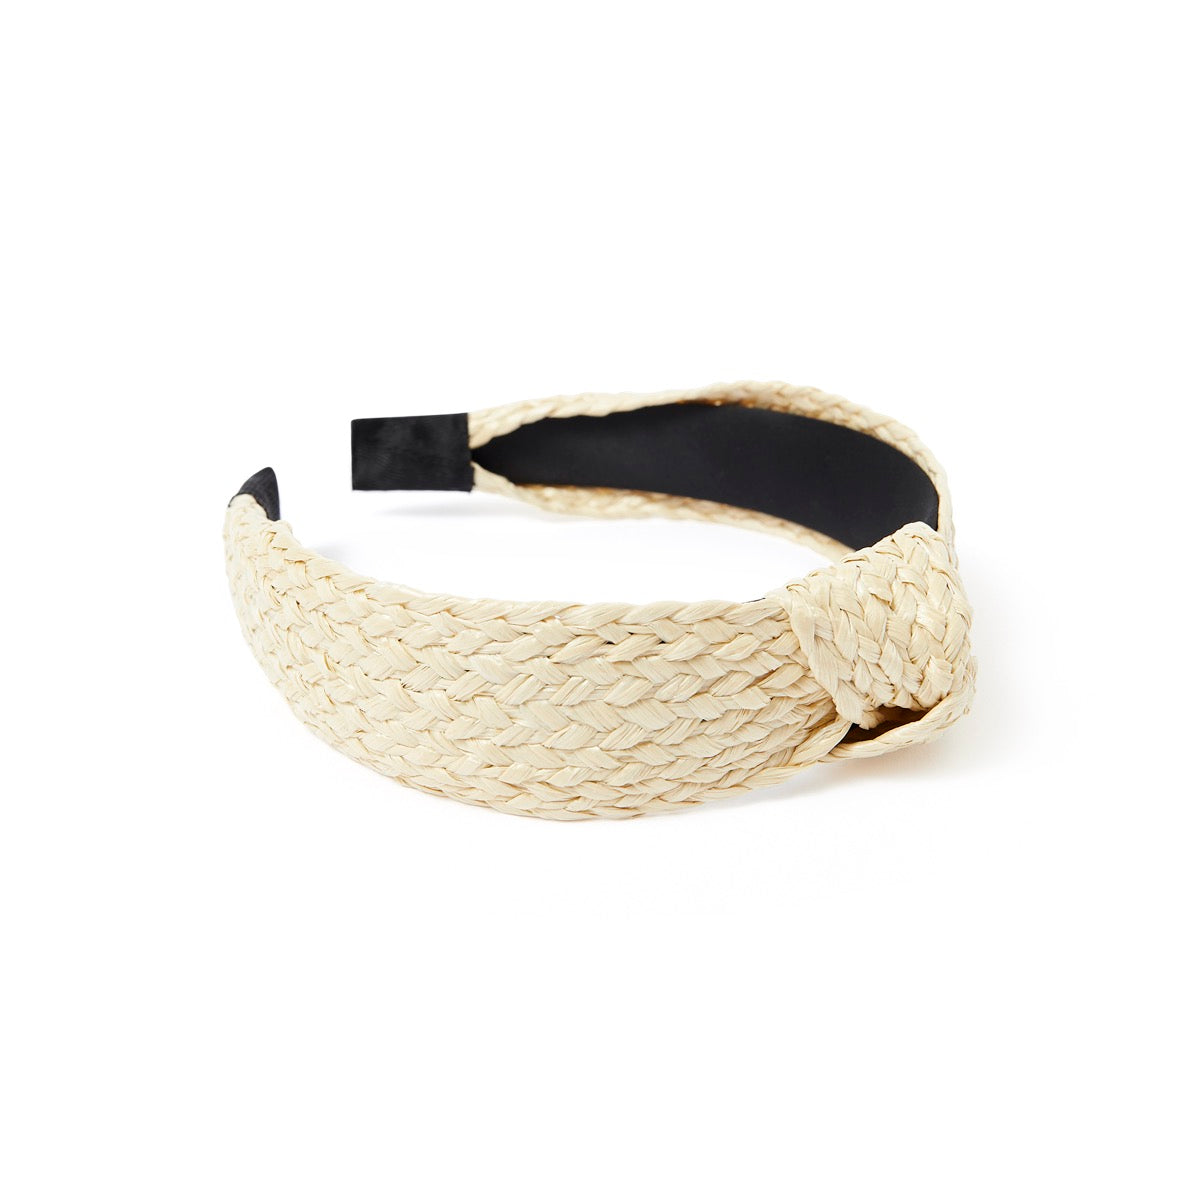 Beige braided bow headband